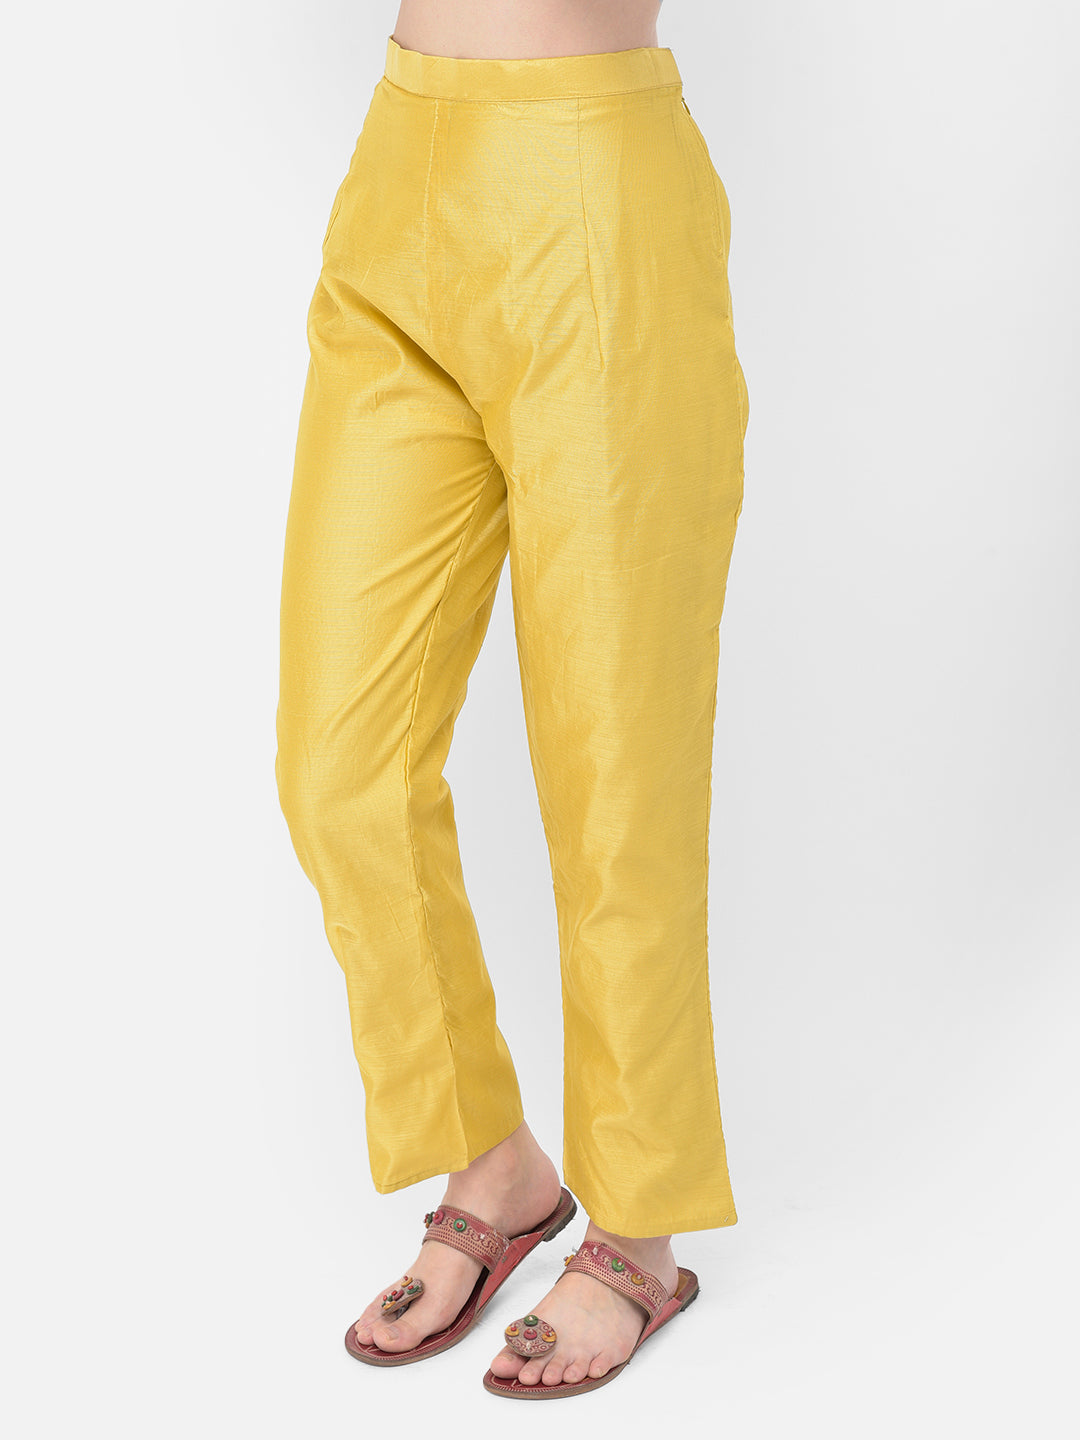 Neeru's'S Yellow Color Chanderi Fabric Suit-Pant